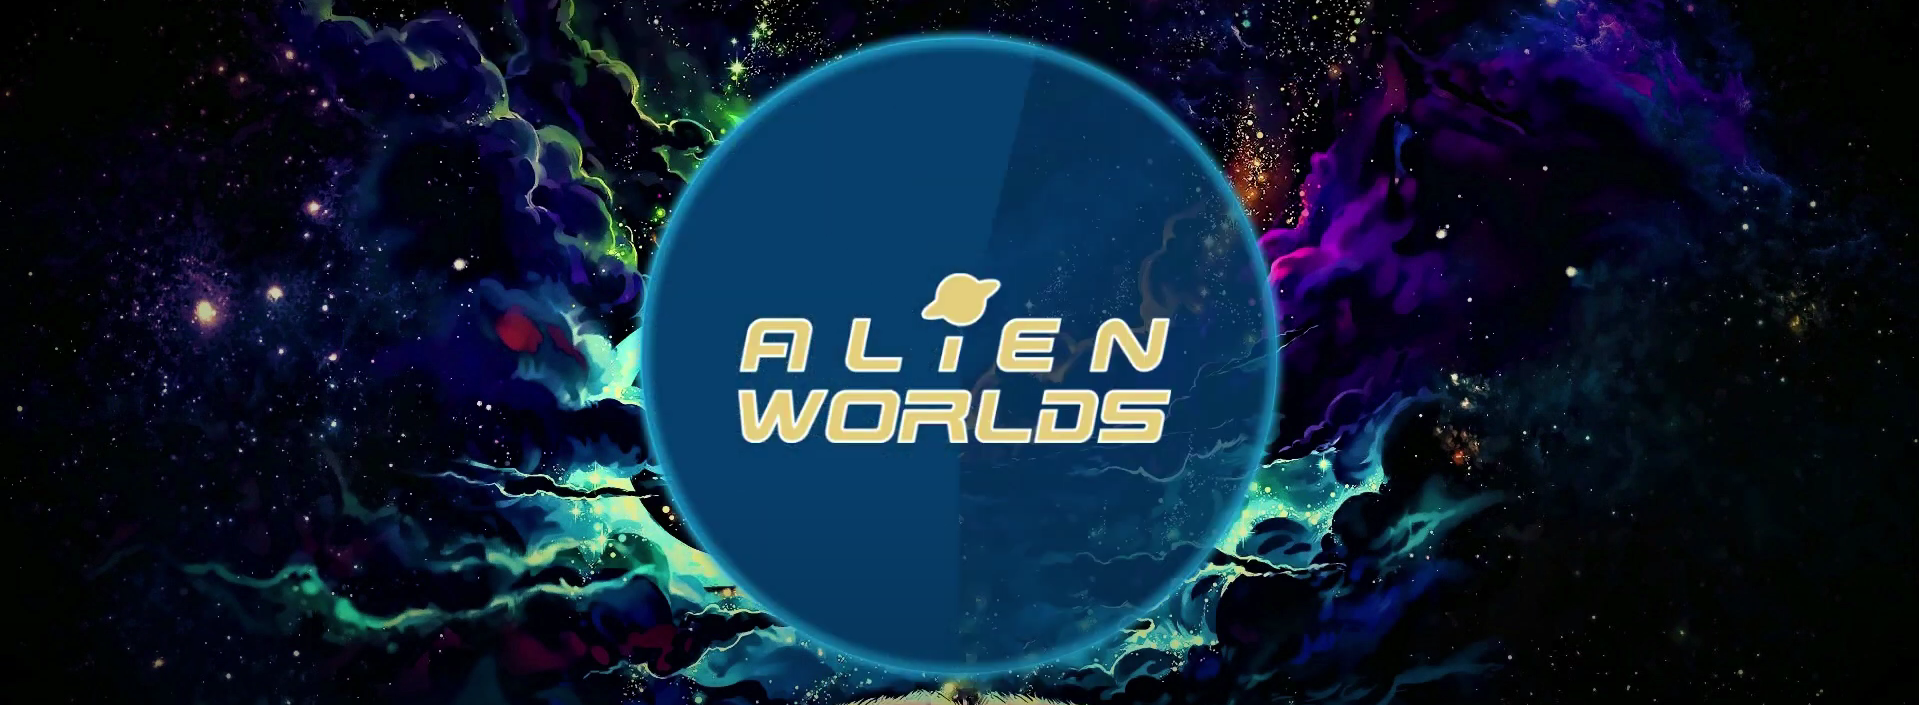 Worlds tlm alien What is